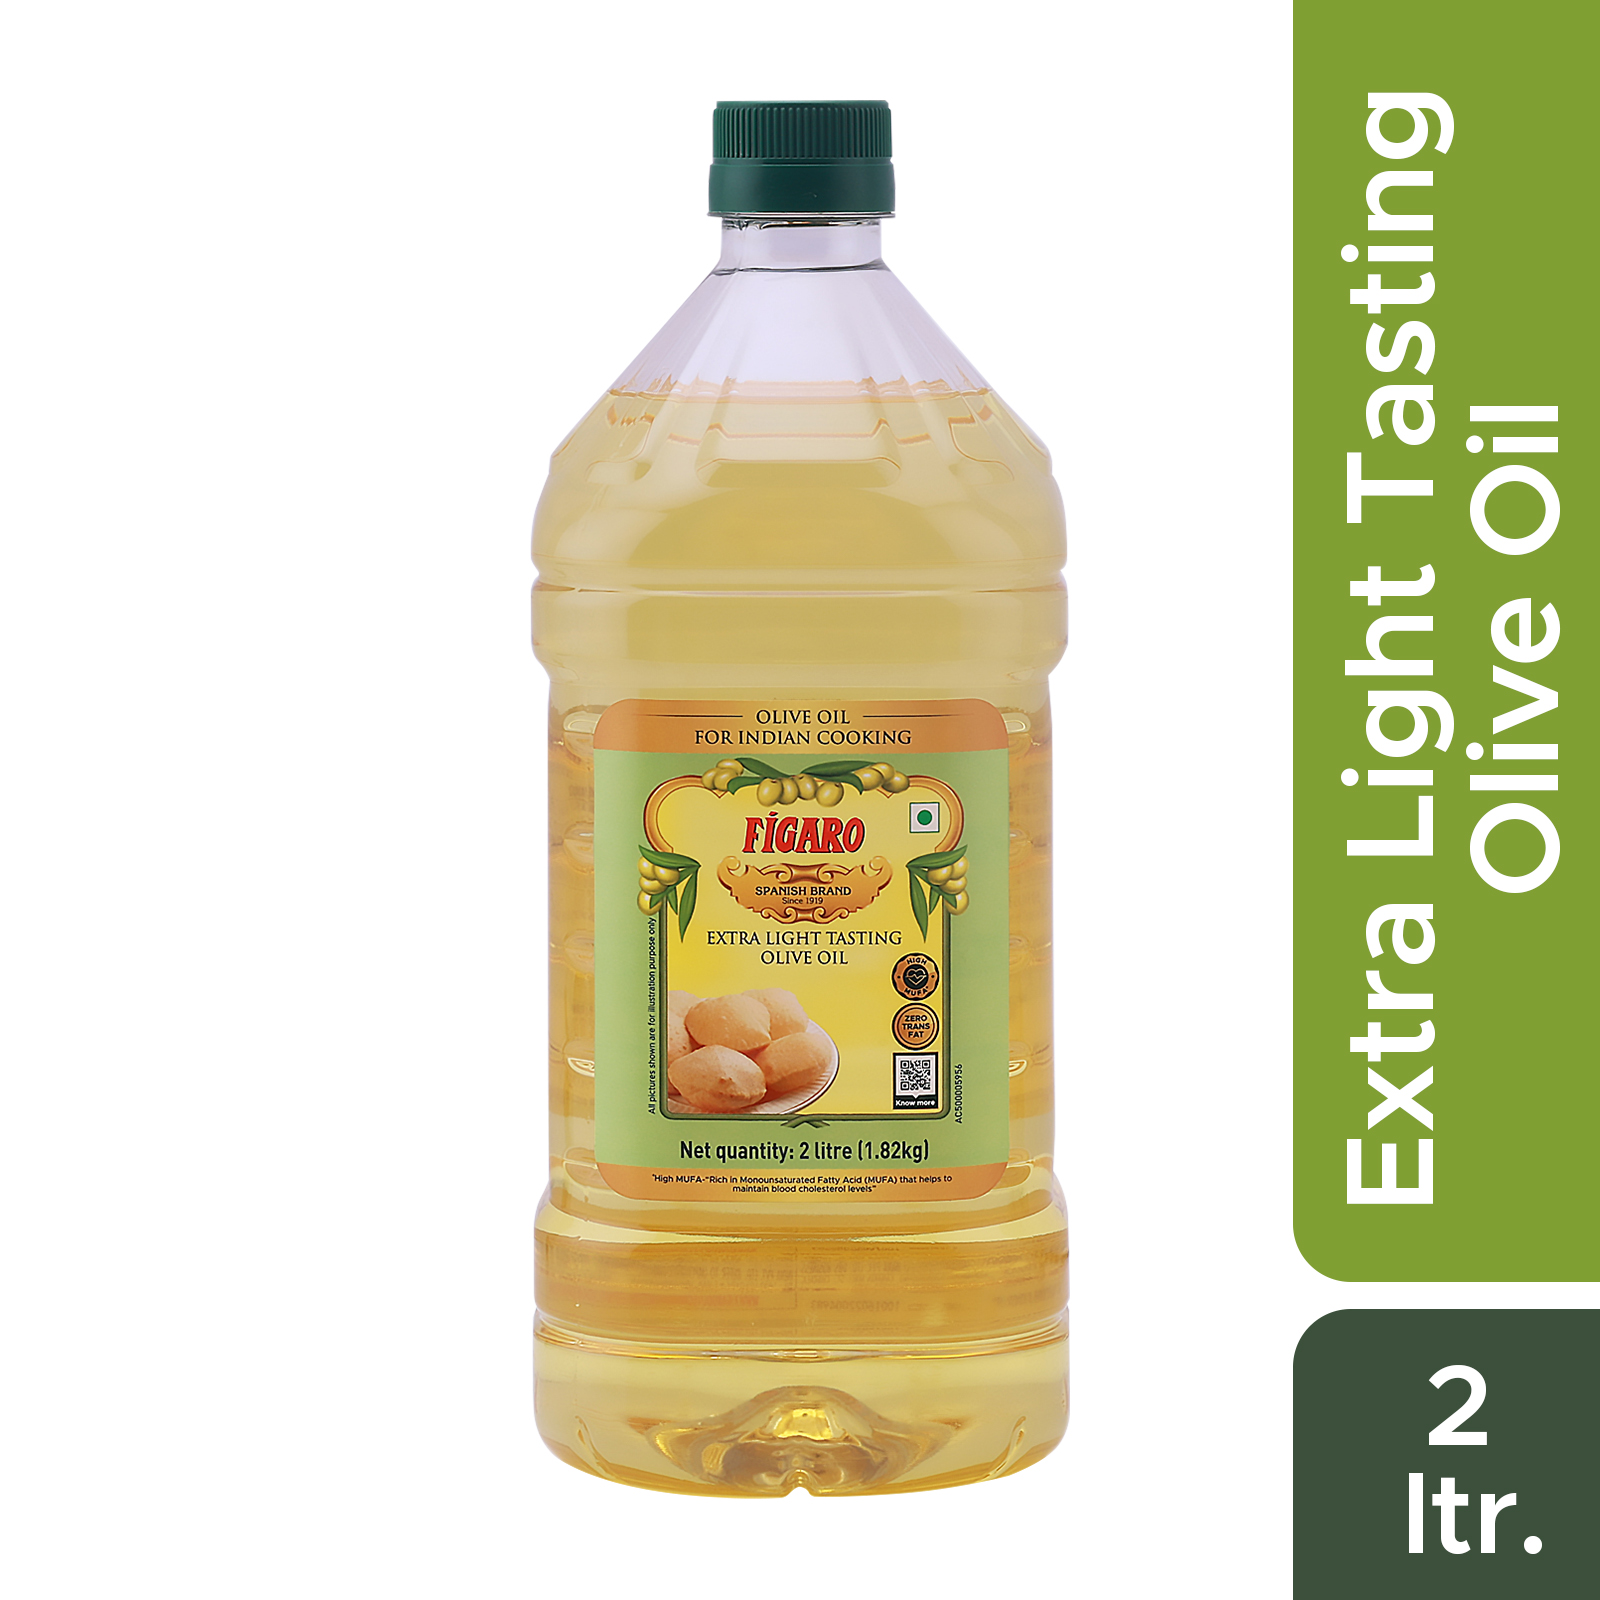 Figaro extra light tasting olive oil – 2L PRODUCT ID: 3641